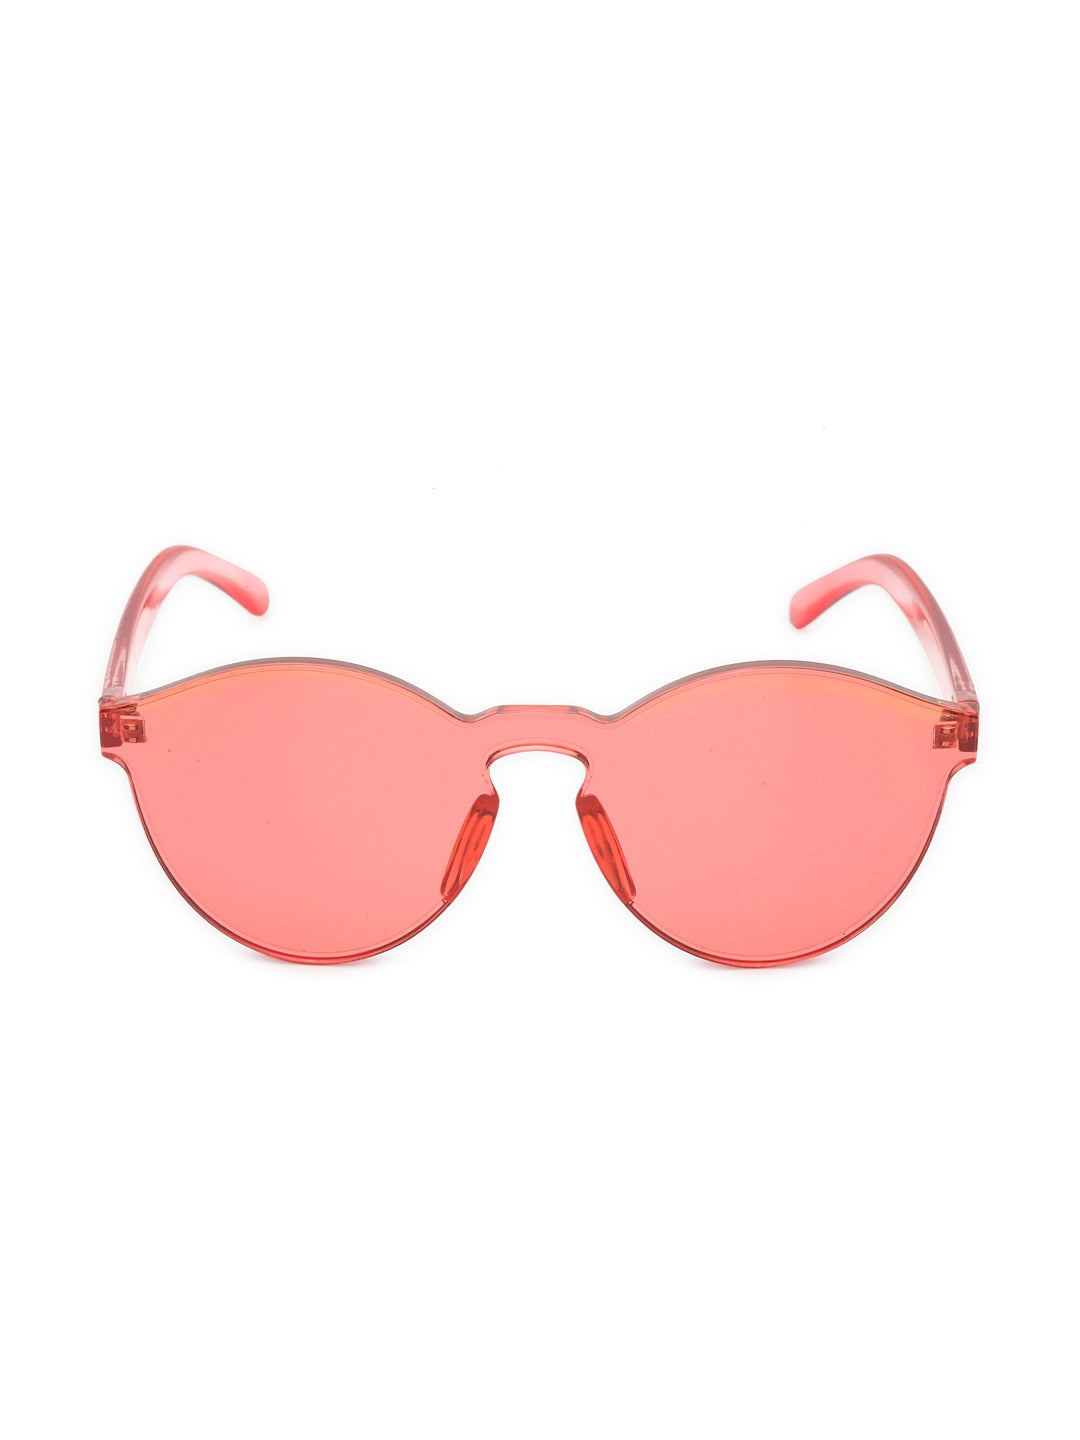 Transparente, randlose, einteilige, bonbonfarbene Sonnenbrille